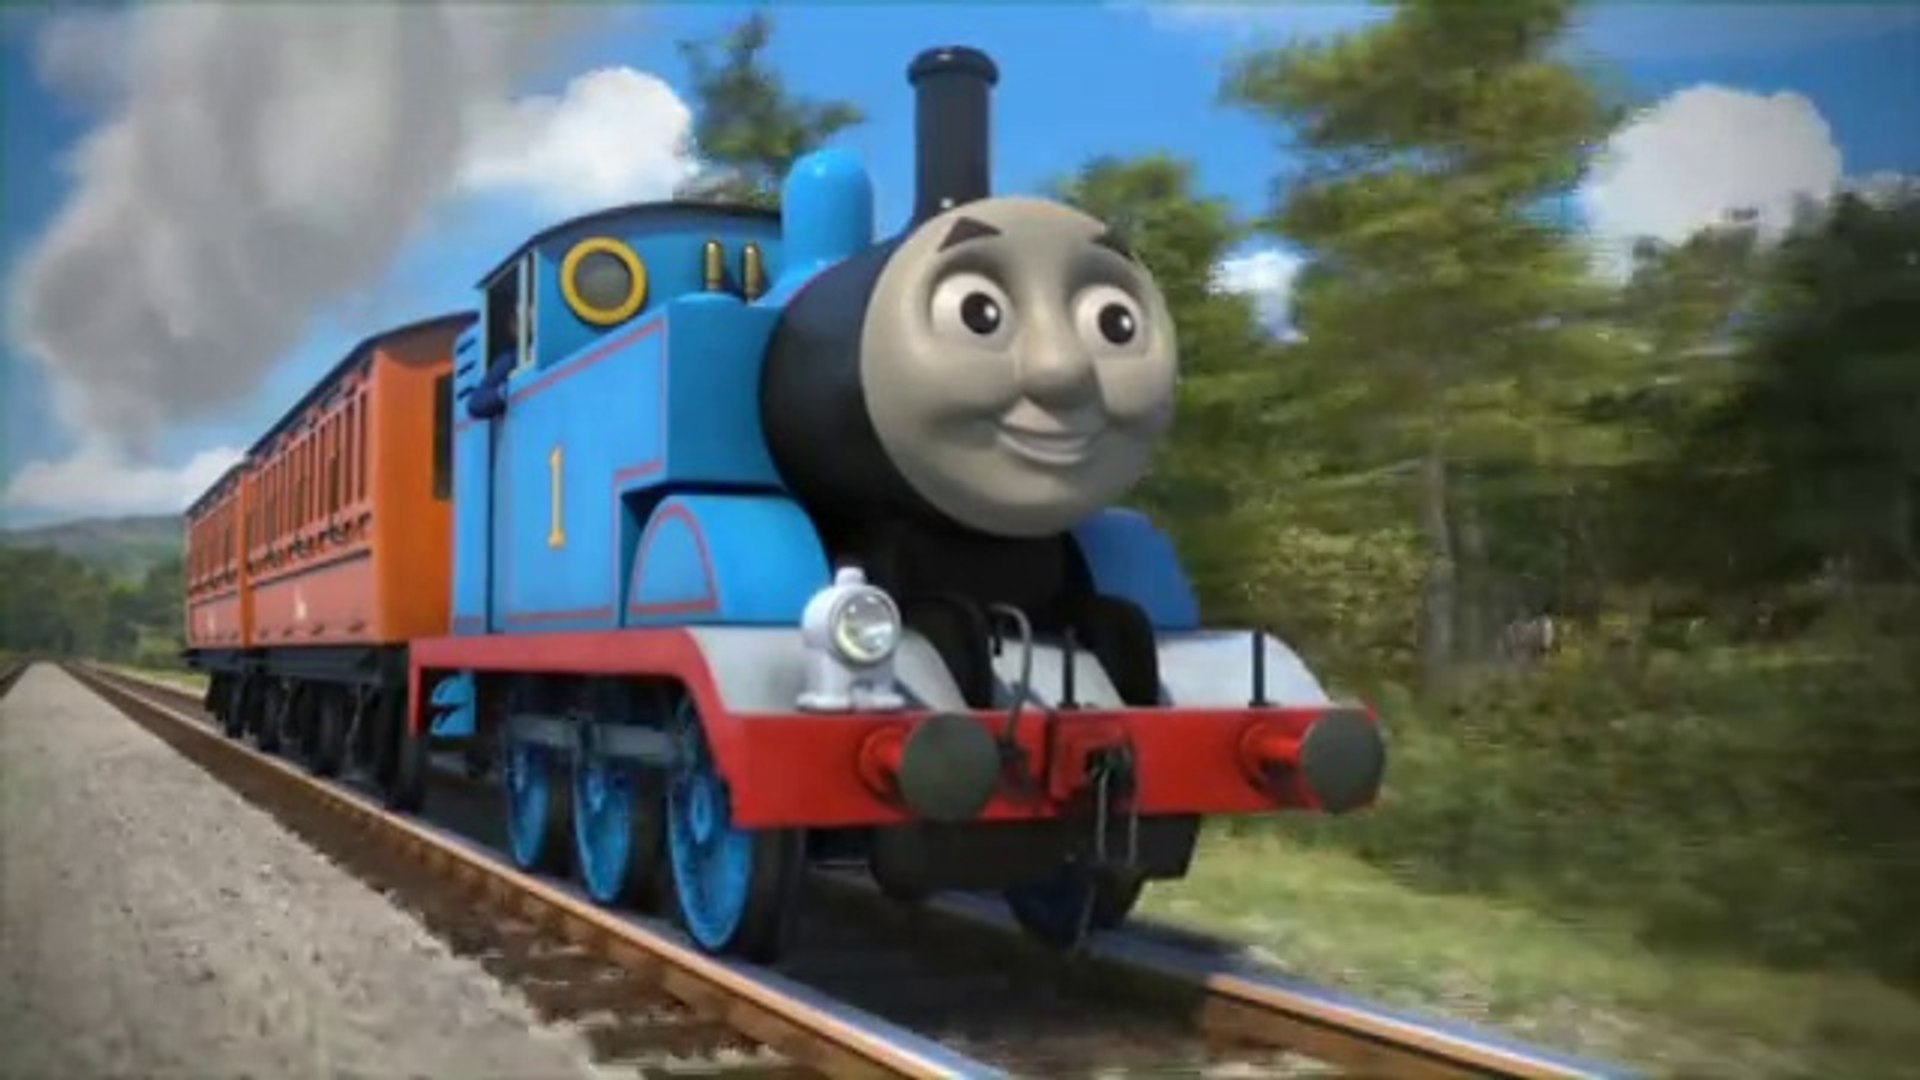 Thomas & Friends The Adventure Begins US - Full Movie 